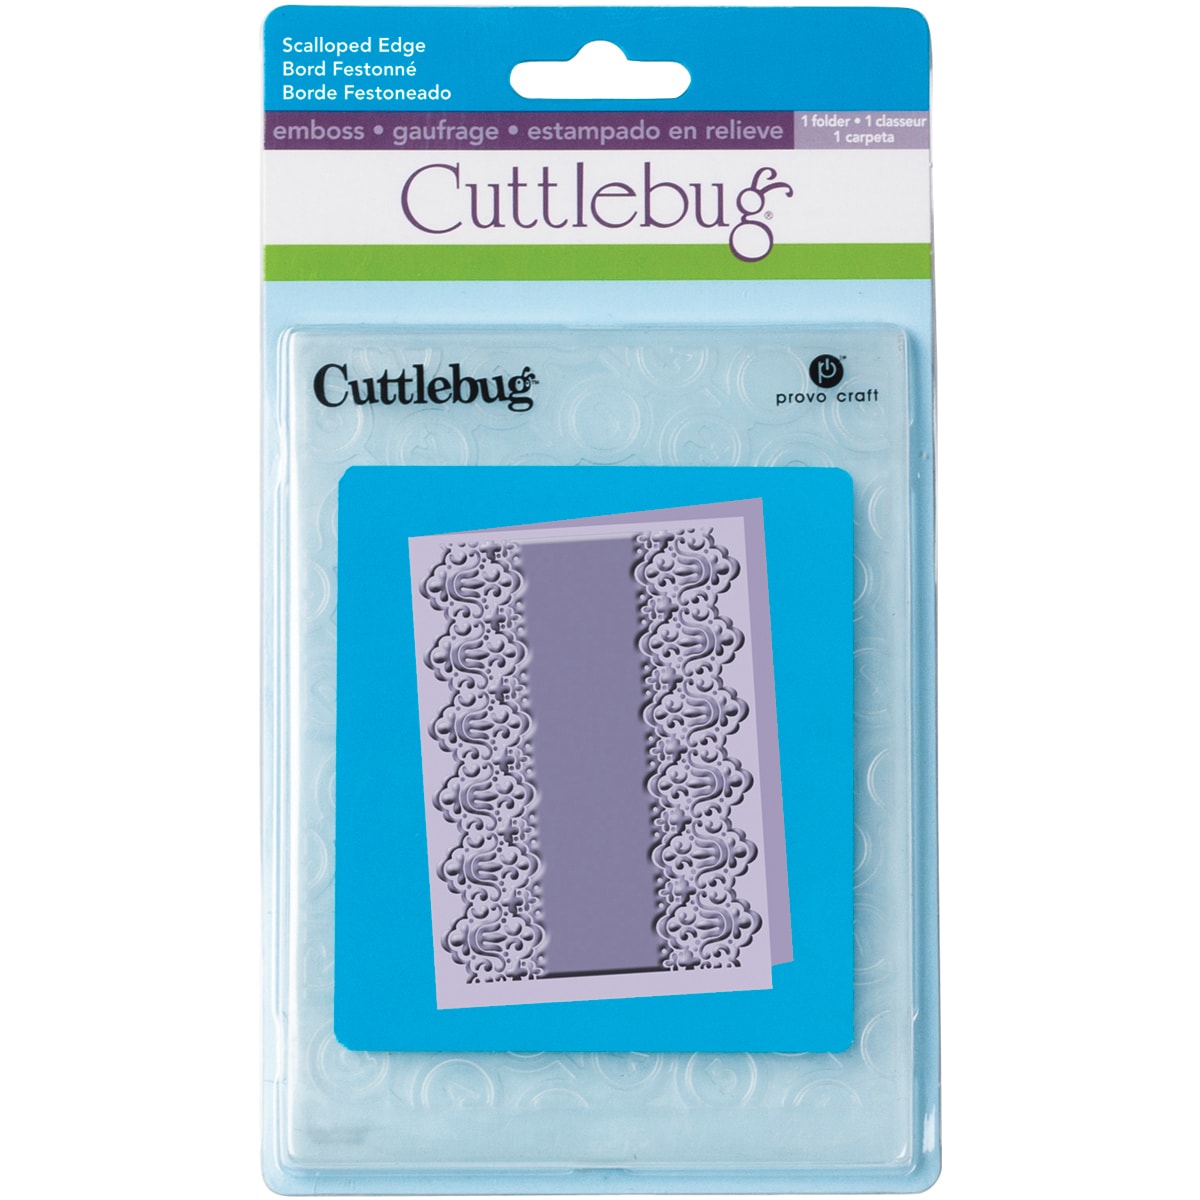 Cuttlebug 5x7 Embossing Folder scalloped Edge Lace